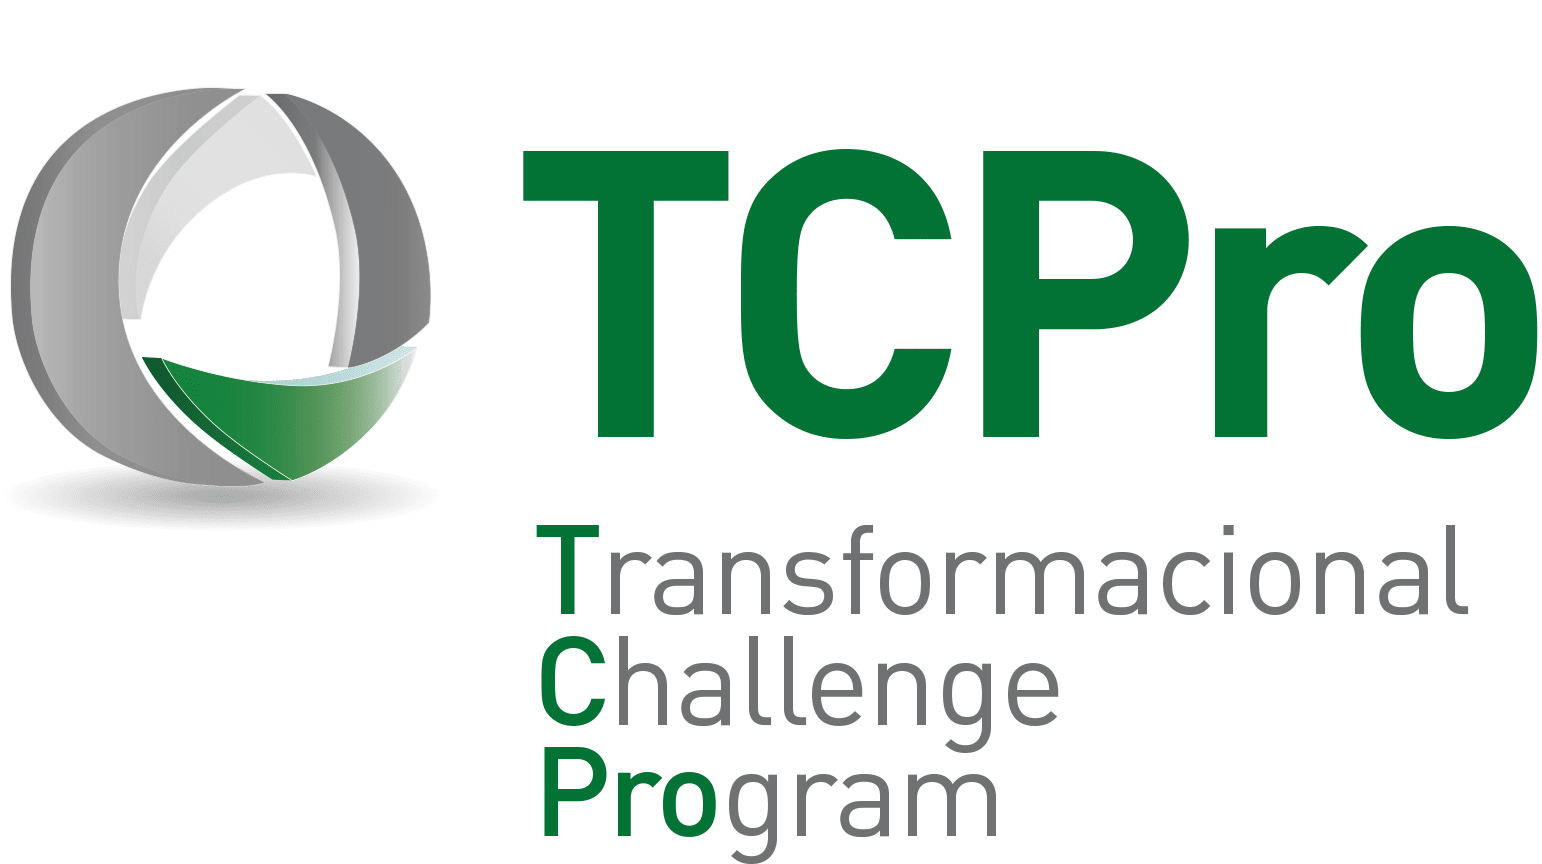 Transformational Challenge Program